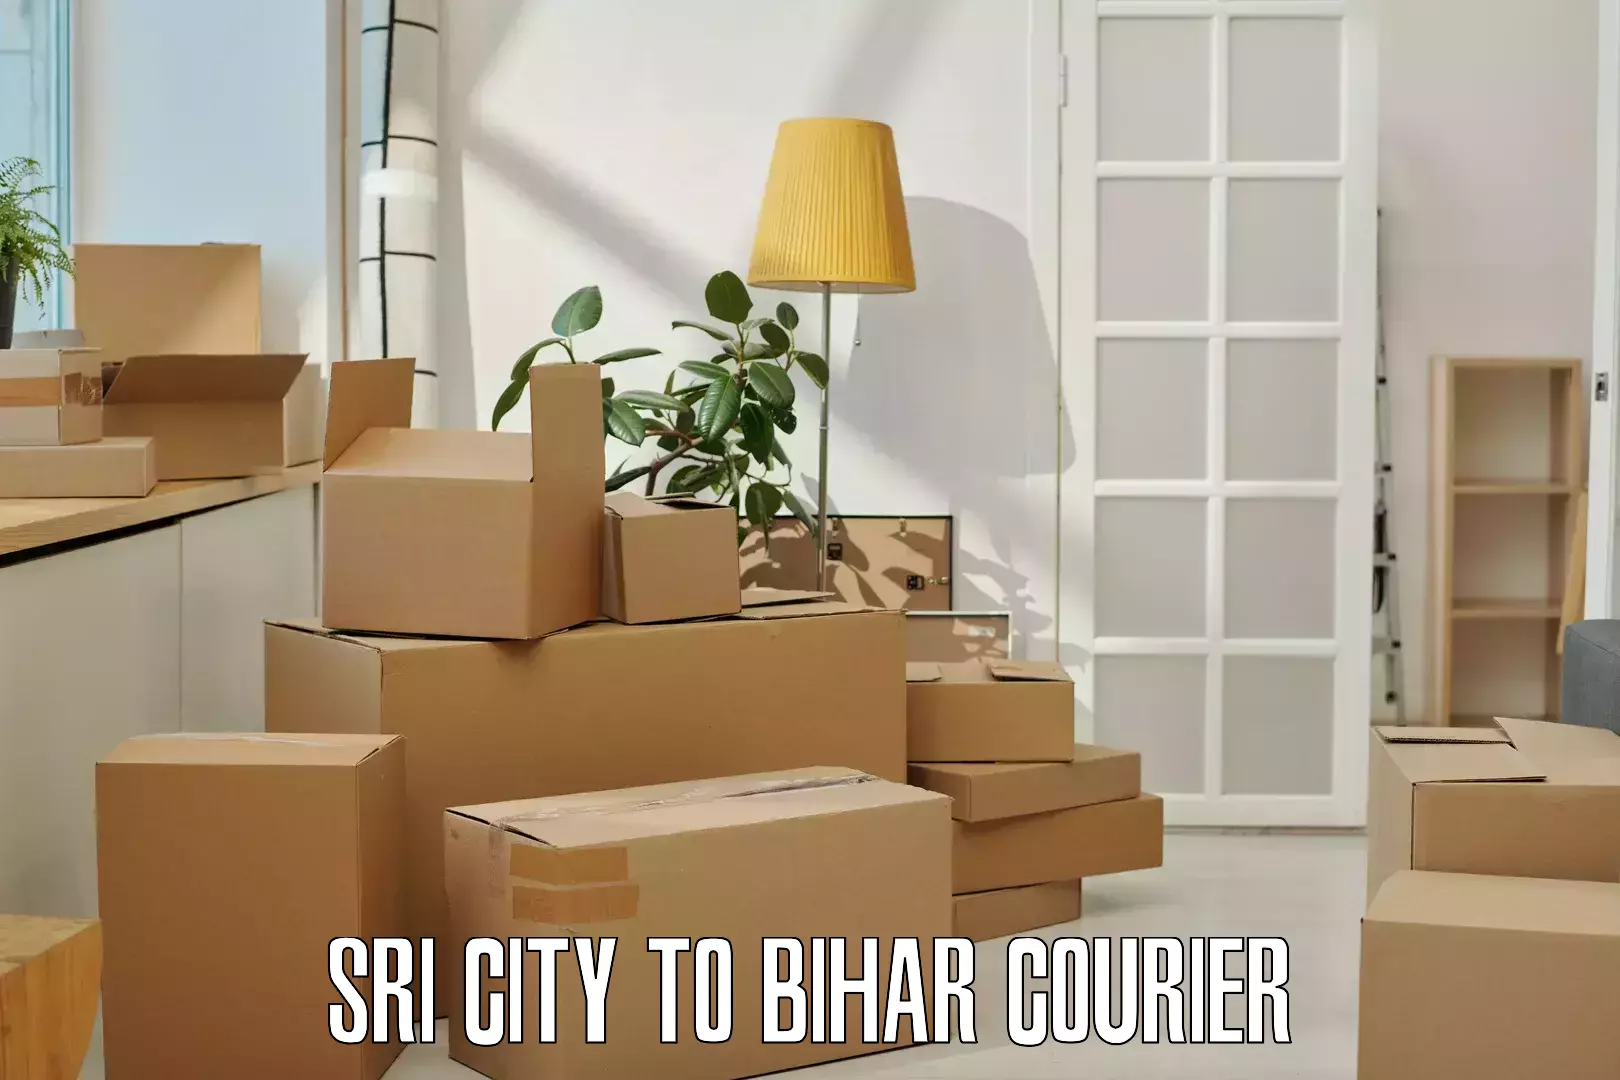 24/7 courier service Sri City to Bihar